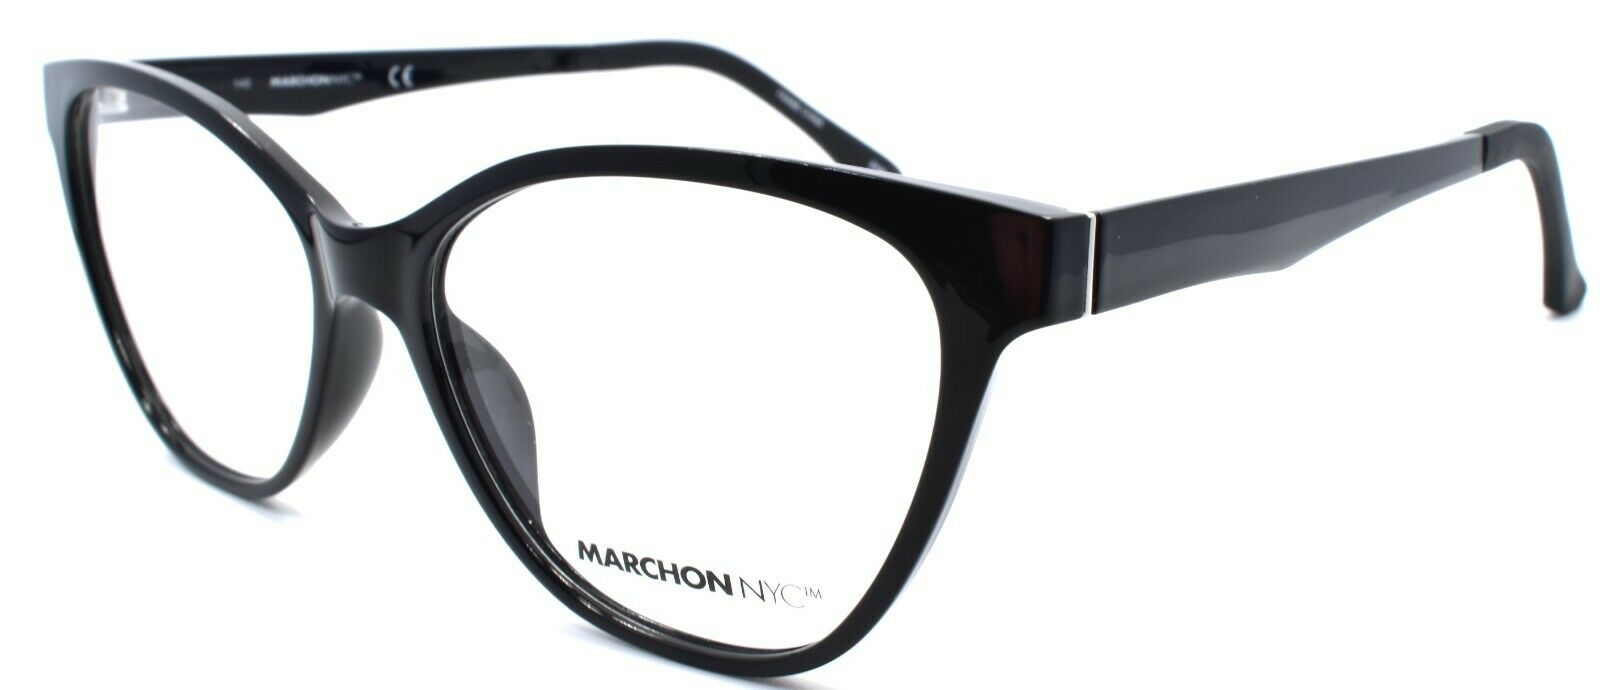 3-Marchon M-1500 001 Women's Eyeglasses 54-15-140 Black + 2 Magnetic Clip Ons-886895485838-IKSpecs